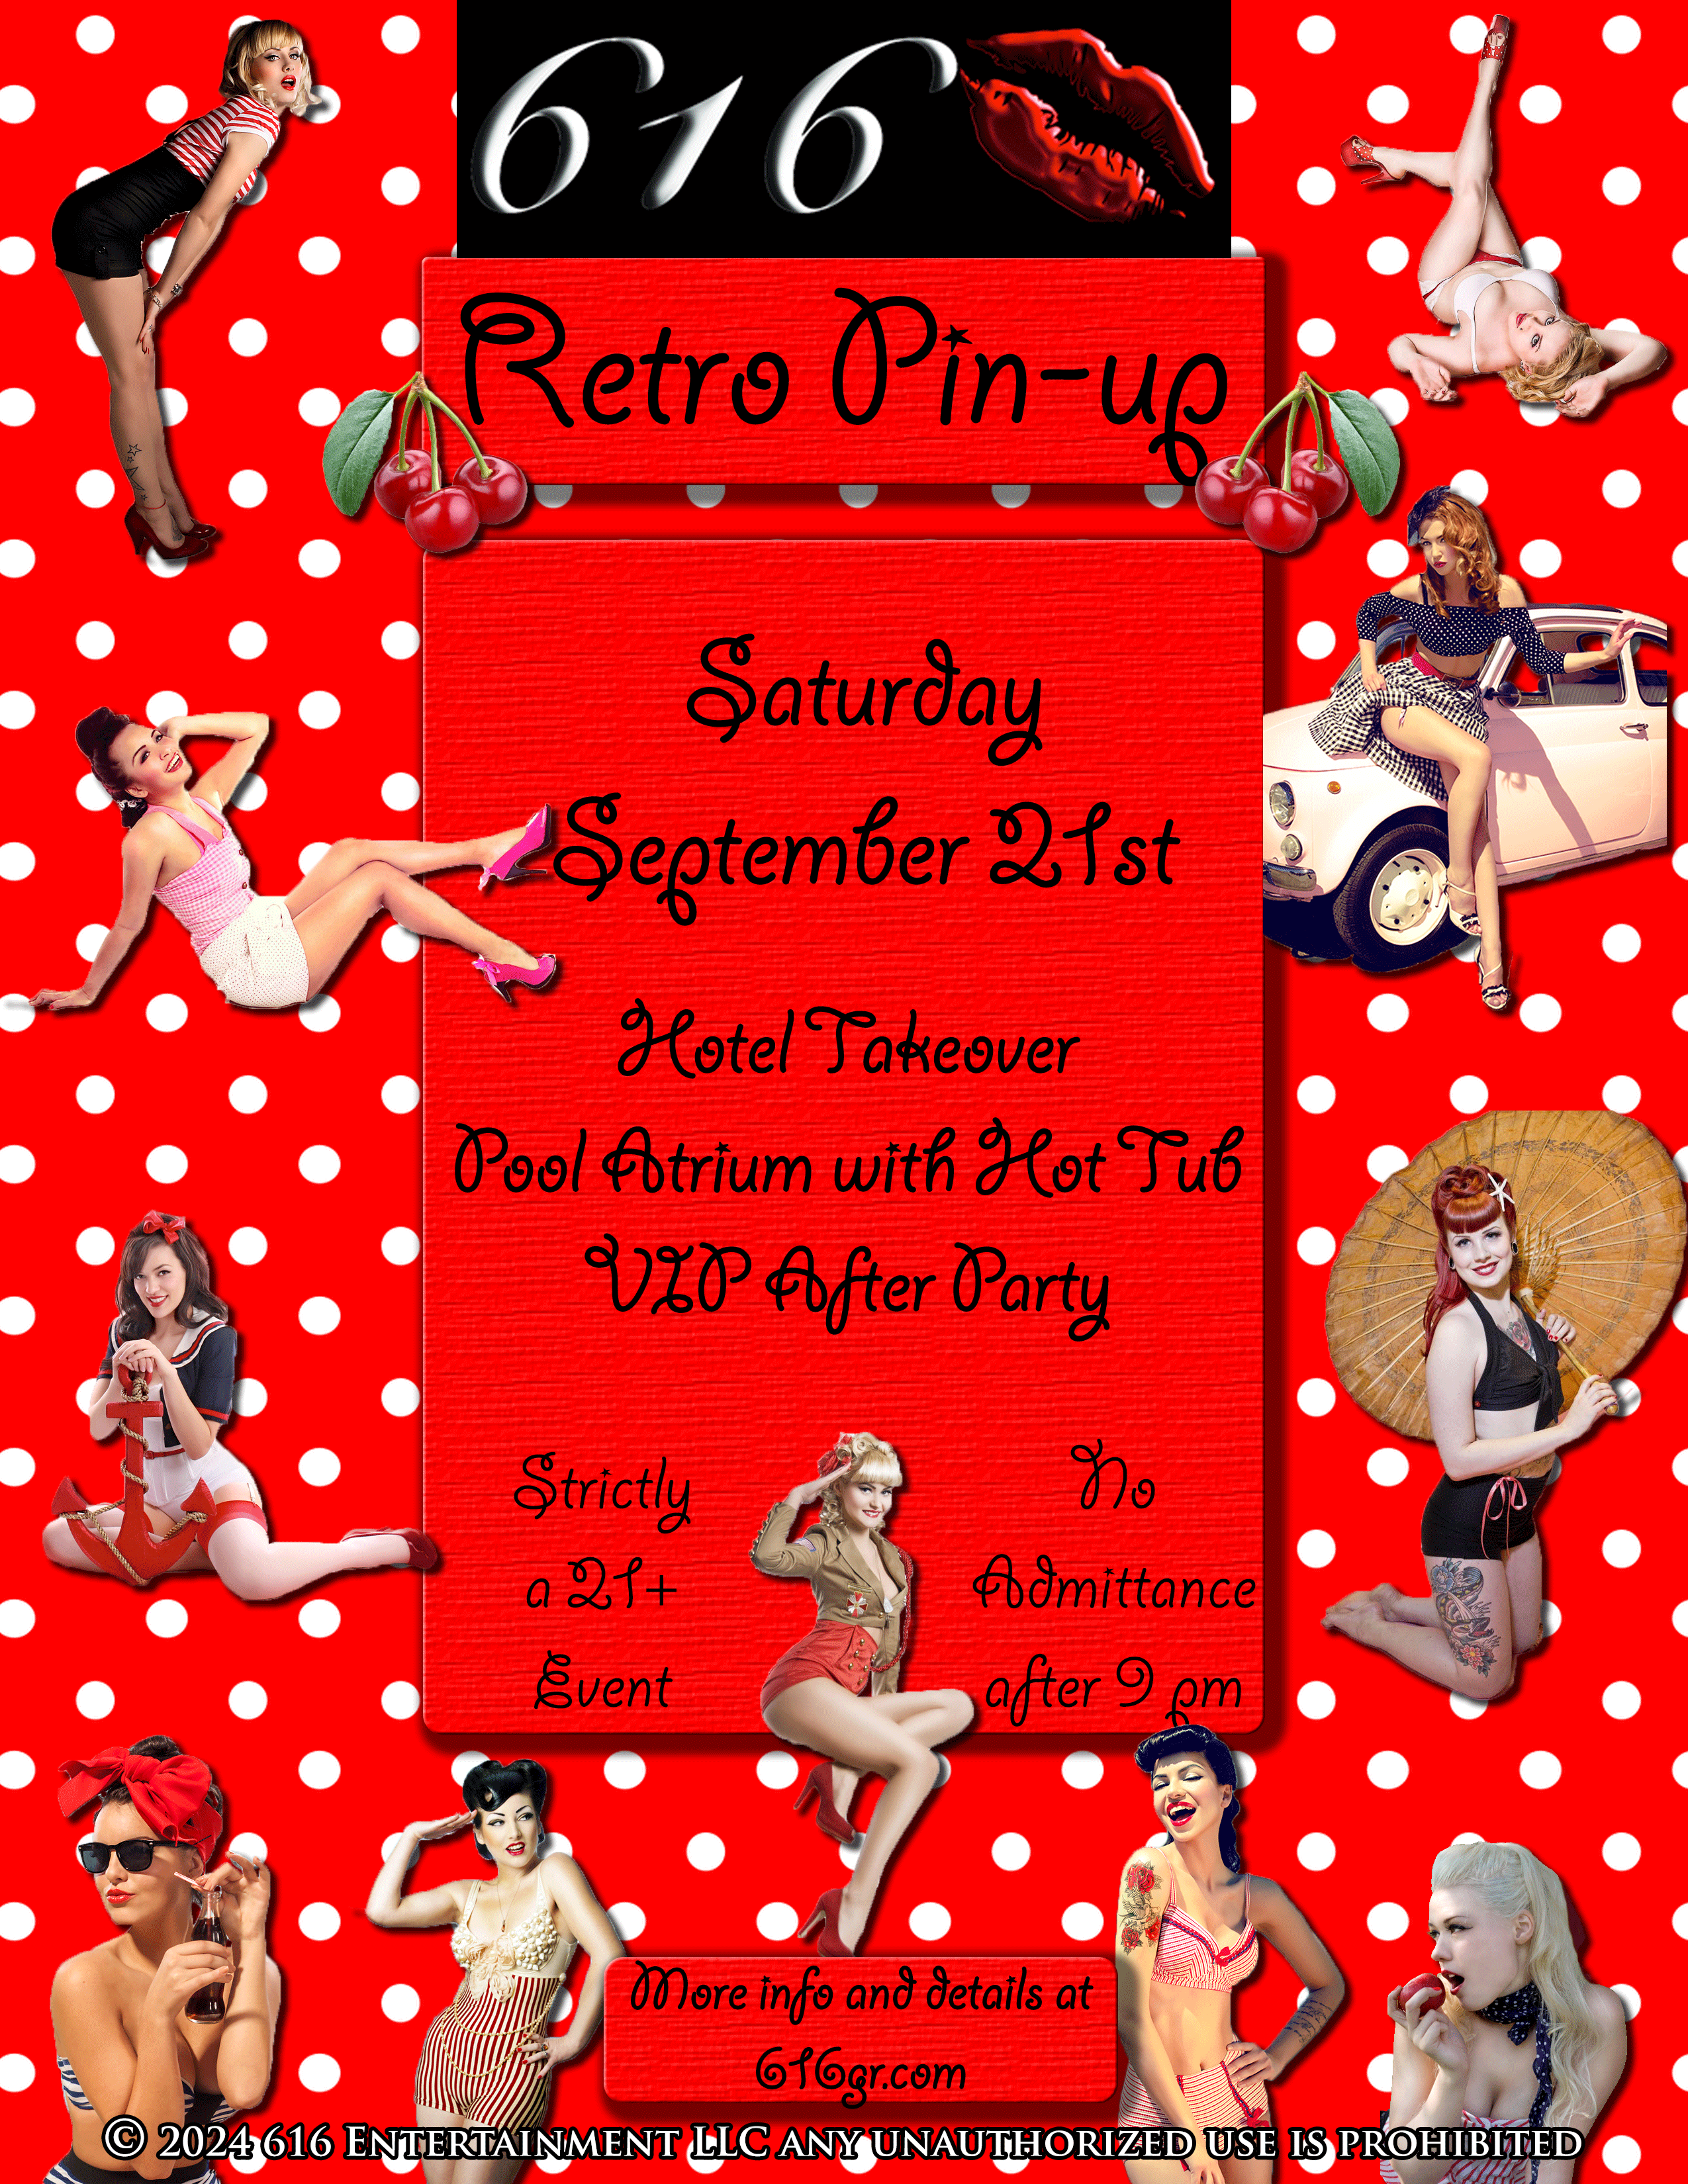 616 Retro Pin Up, Saturday September 21st.